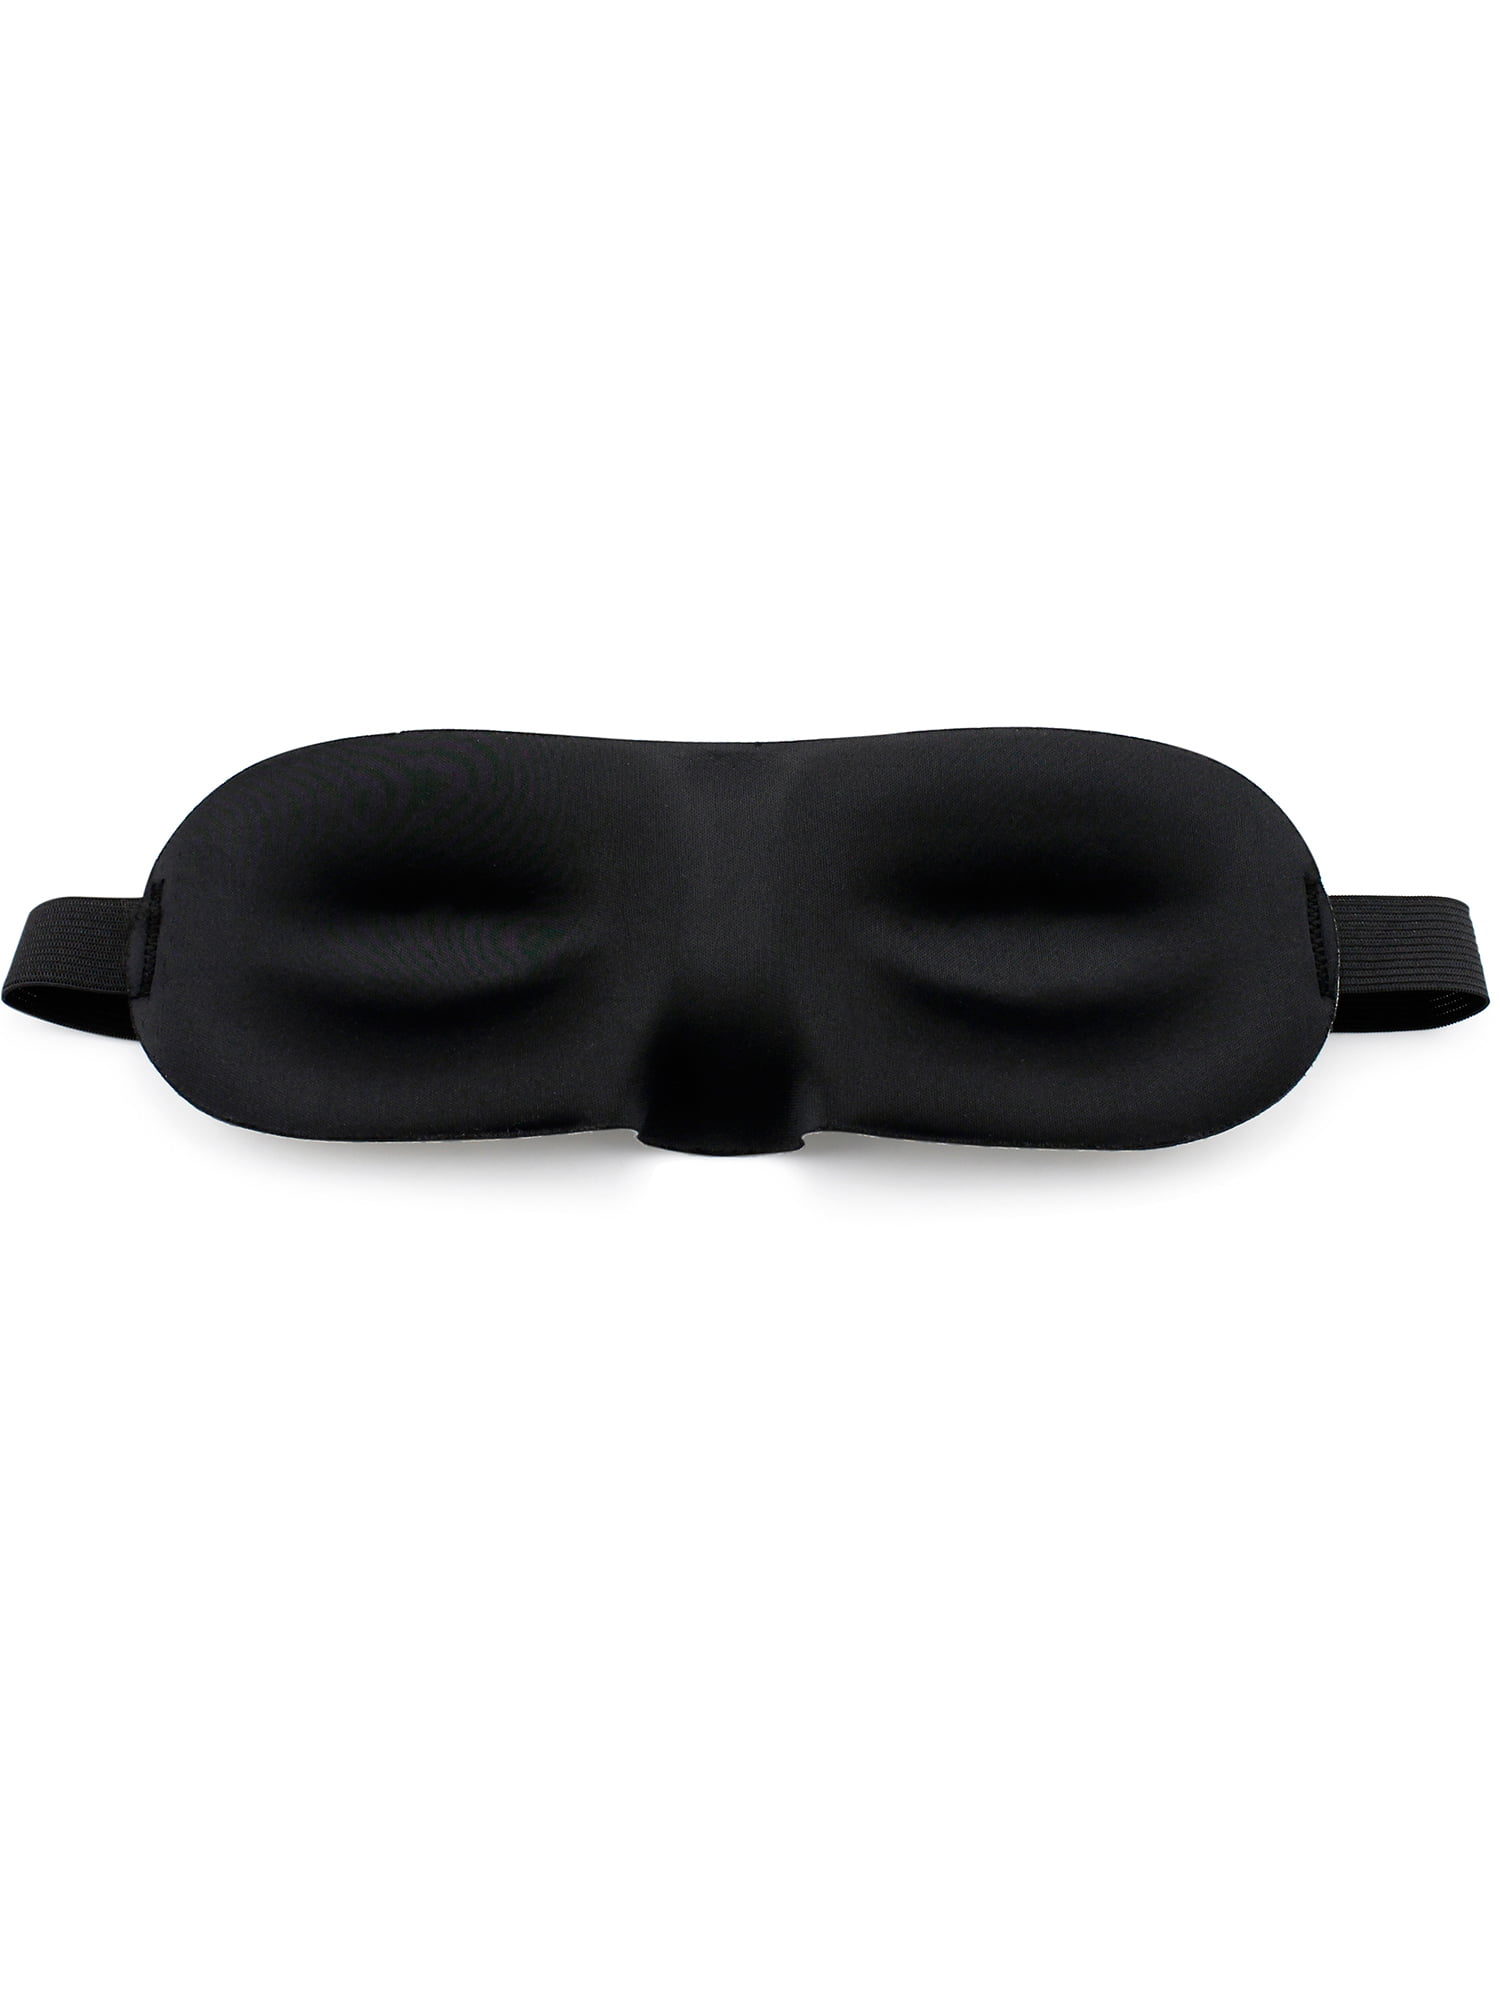 Gearonic 3D Soft Eye Sleep Mask Padded Cover Travel Relax Sleeping Blindfold  